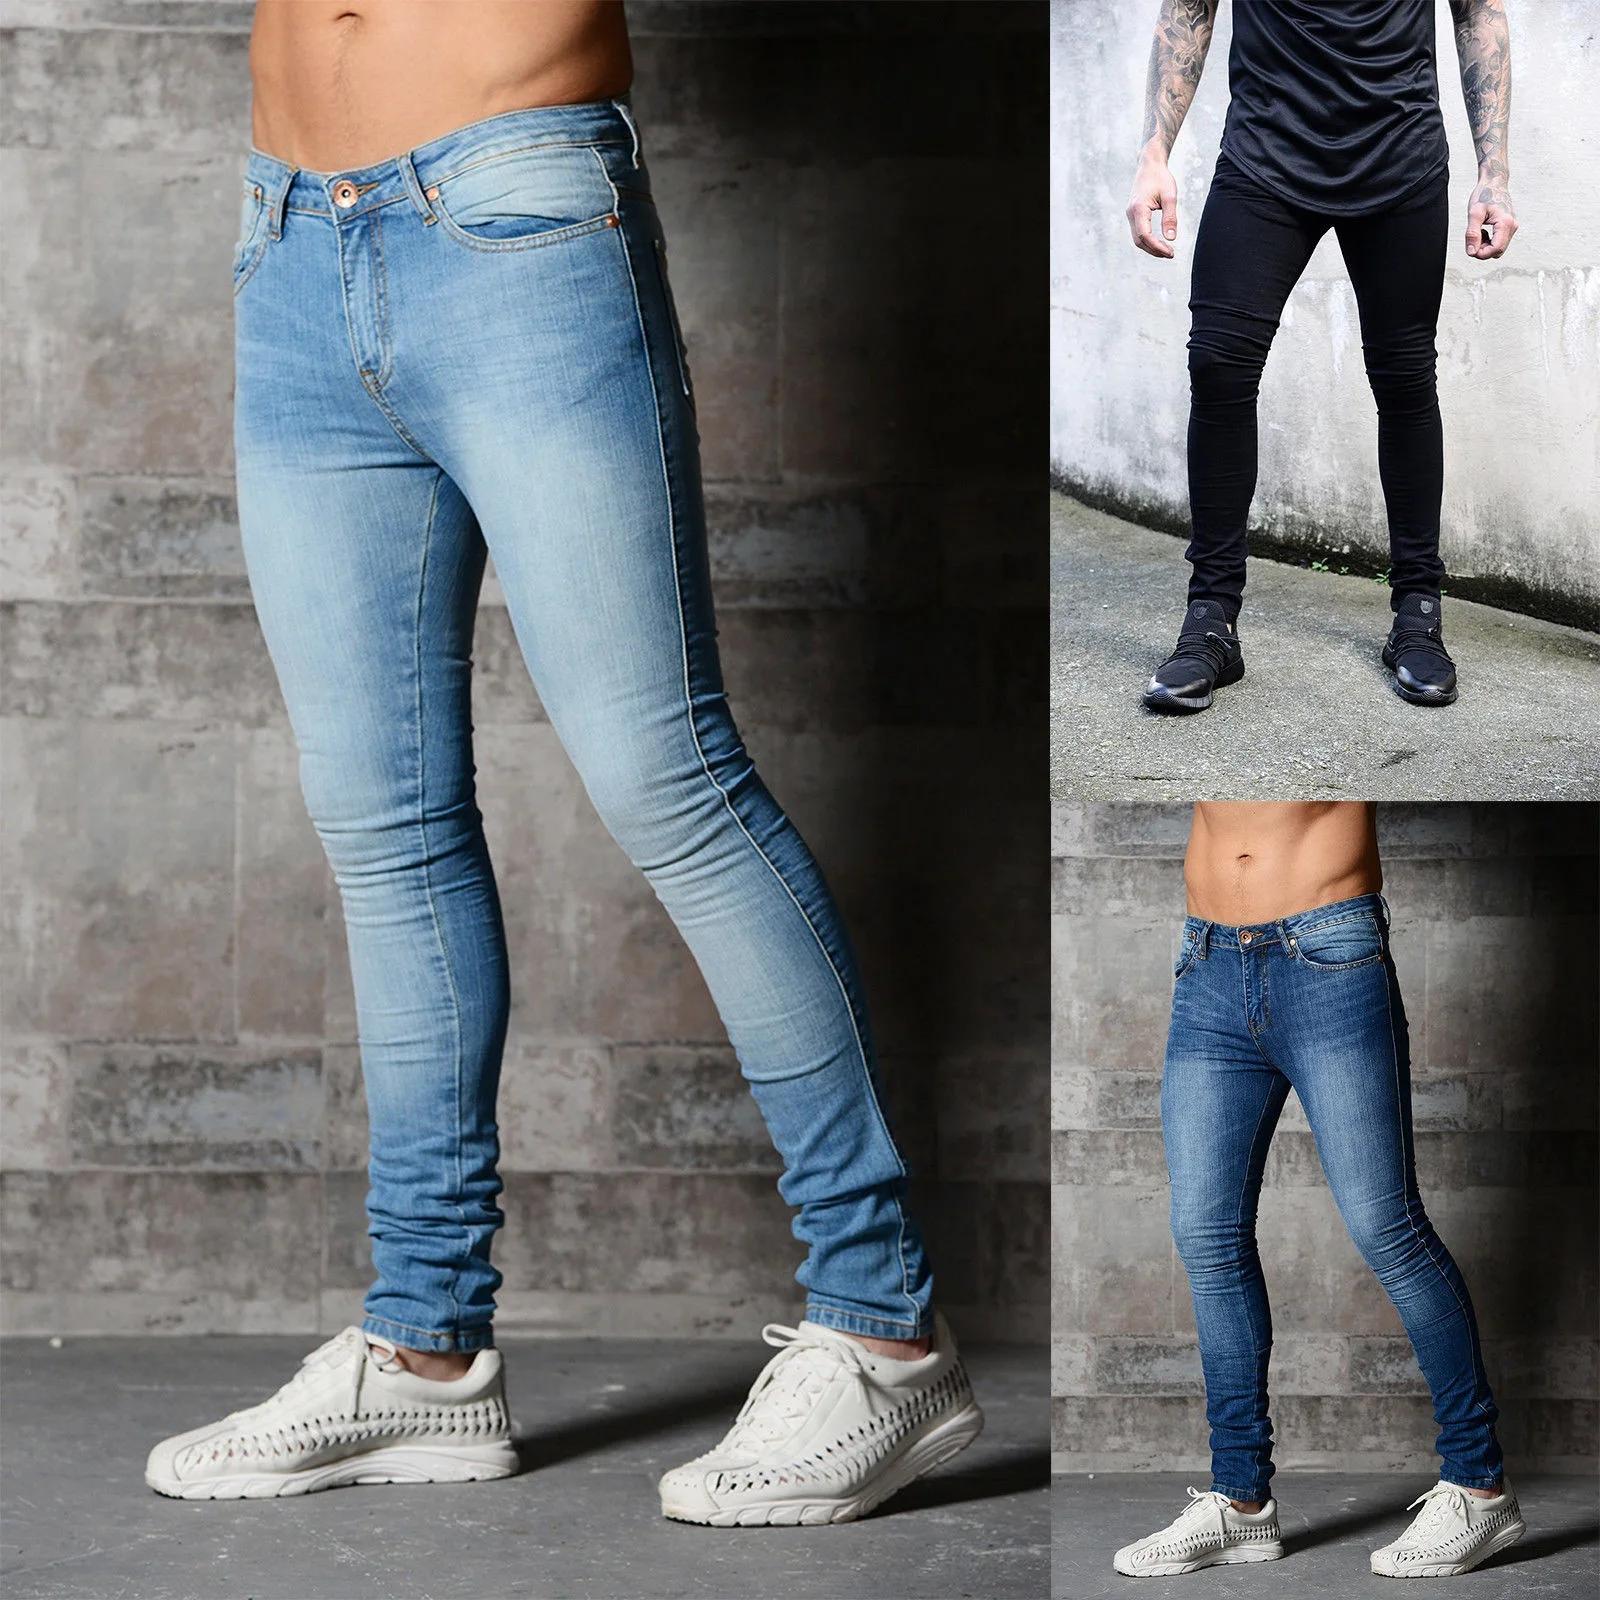 

Men Jeans Runway Slim Racer Biker Jeans Fashion Hiphop Skinny Jeans cotton comfortable soft pants dropshipping